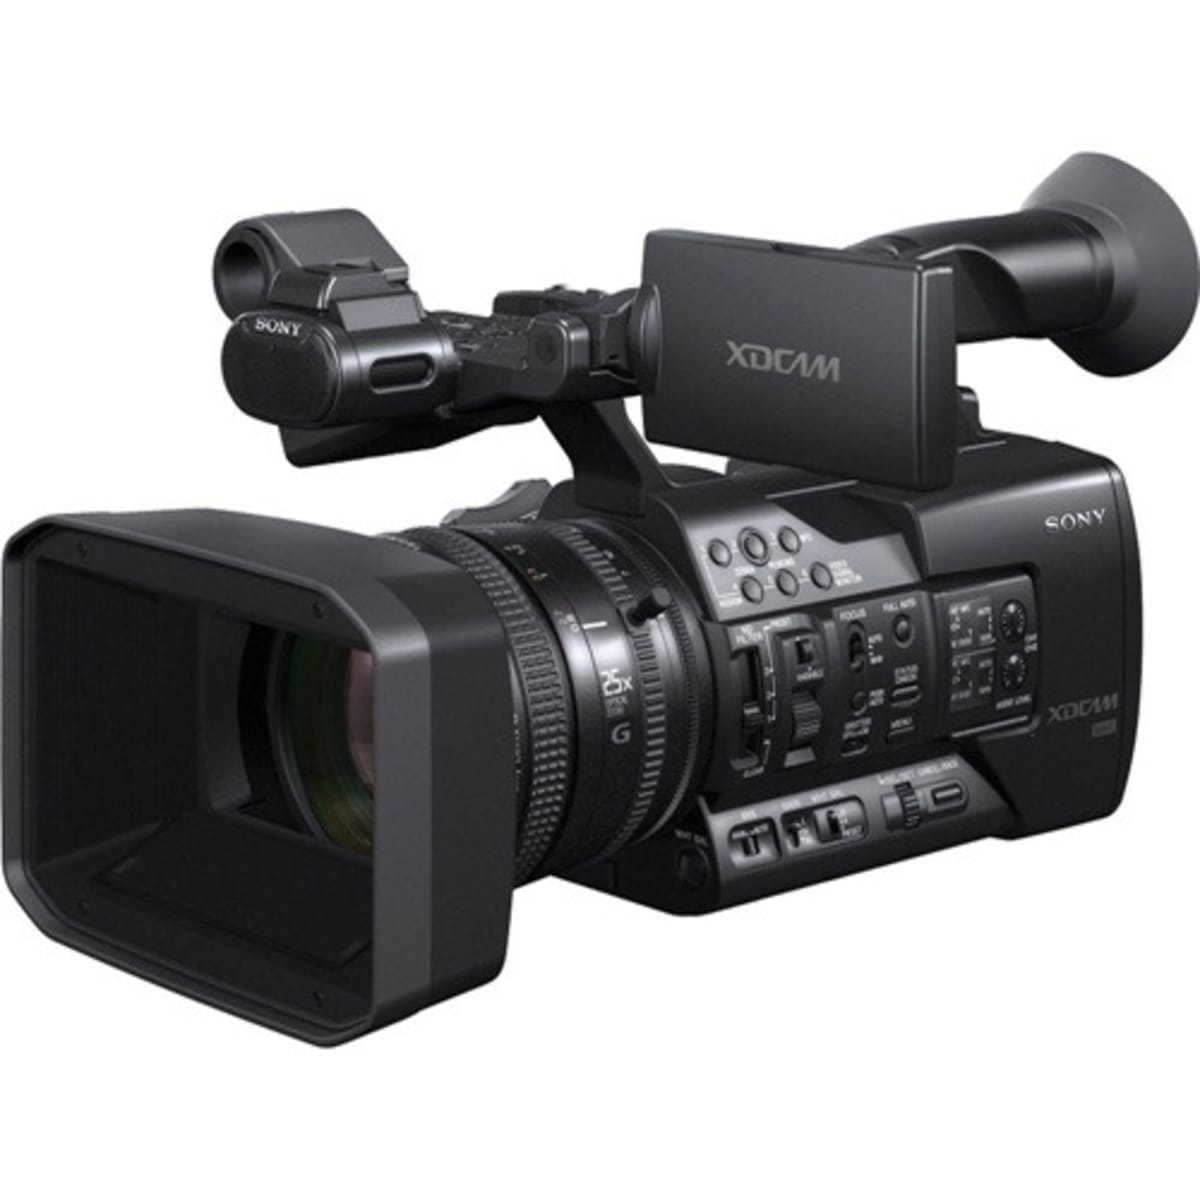 Sony Full HD XDCAM Professional Digital Video | Konga Online Shopping